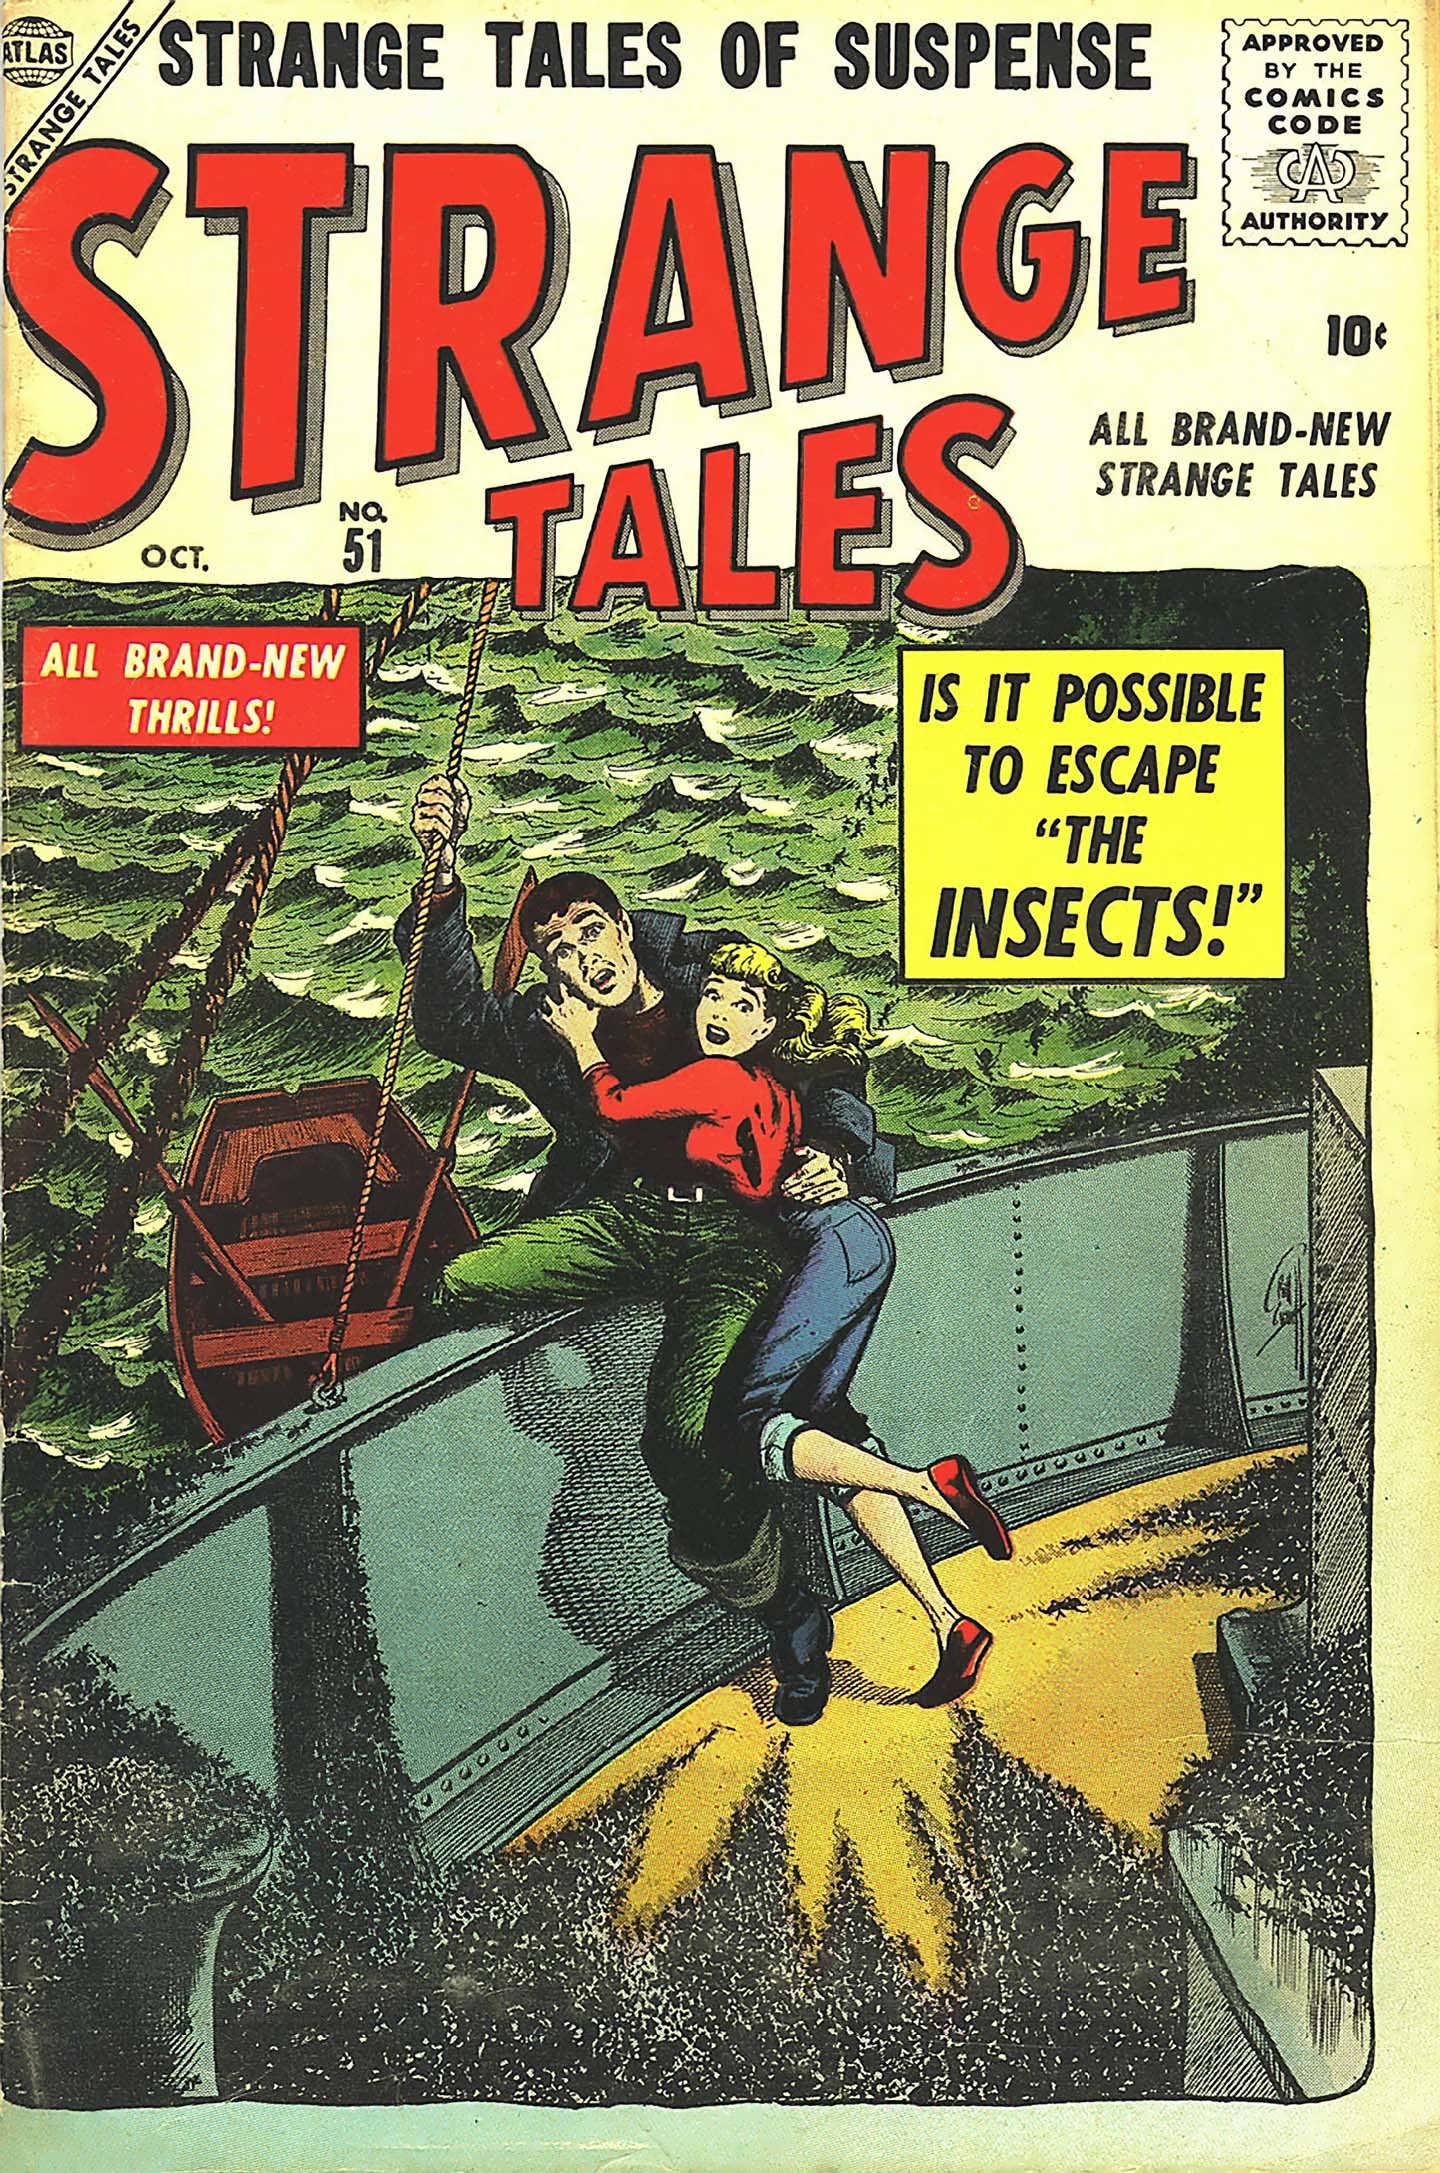 Read online Strange Tales (1951) comic -  Issue #51 - 1